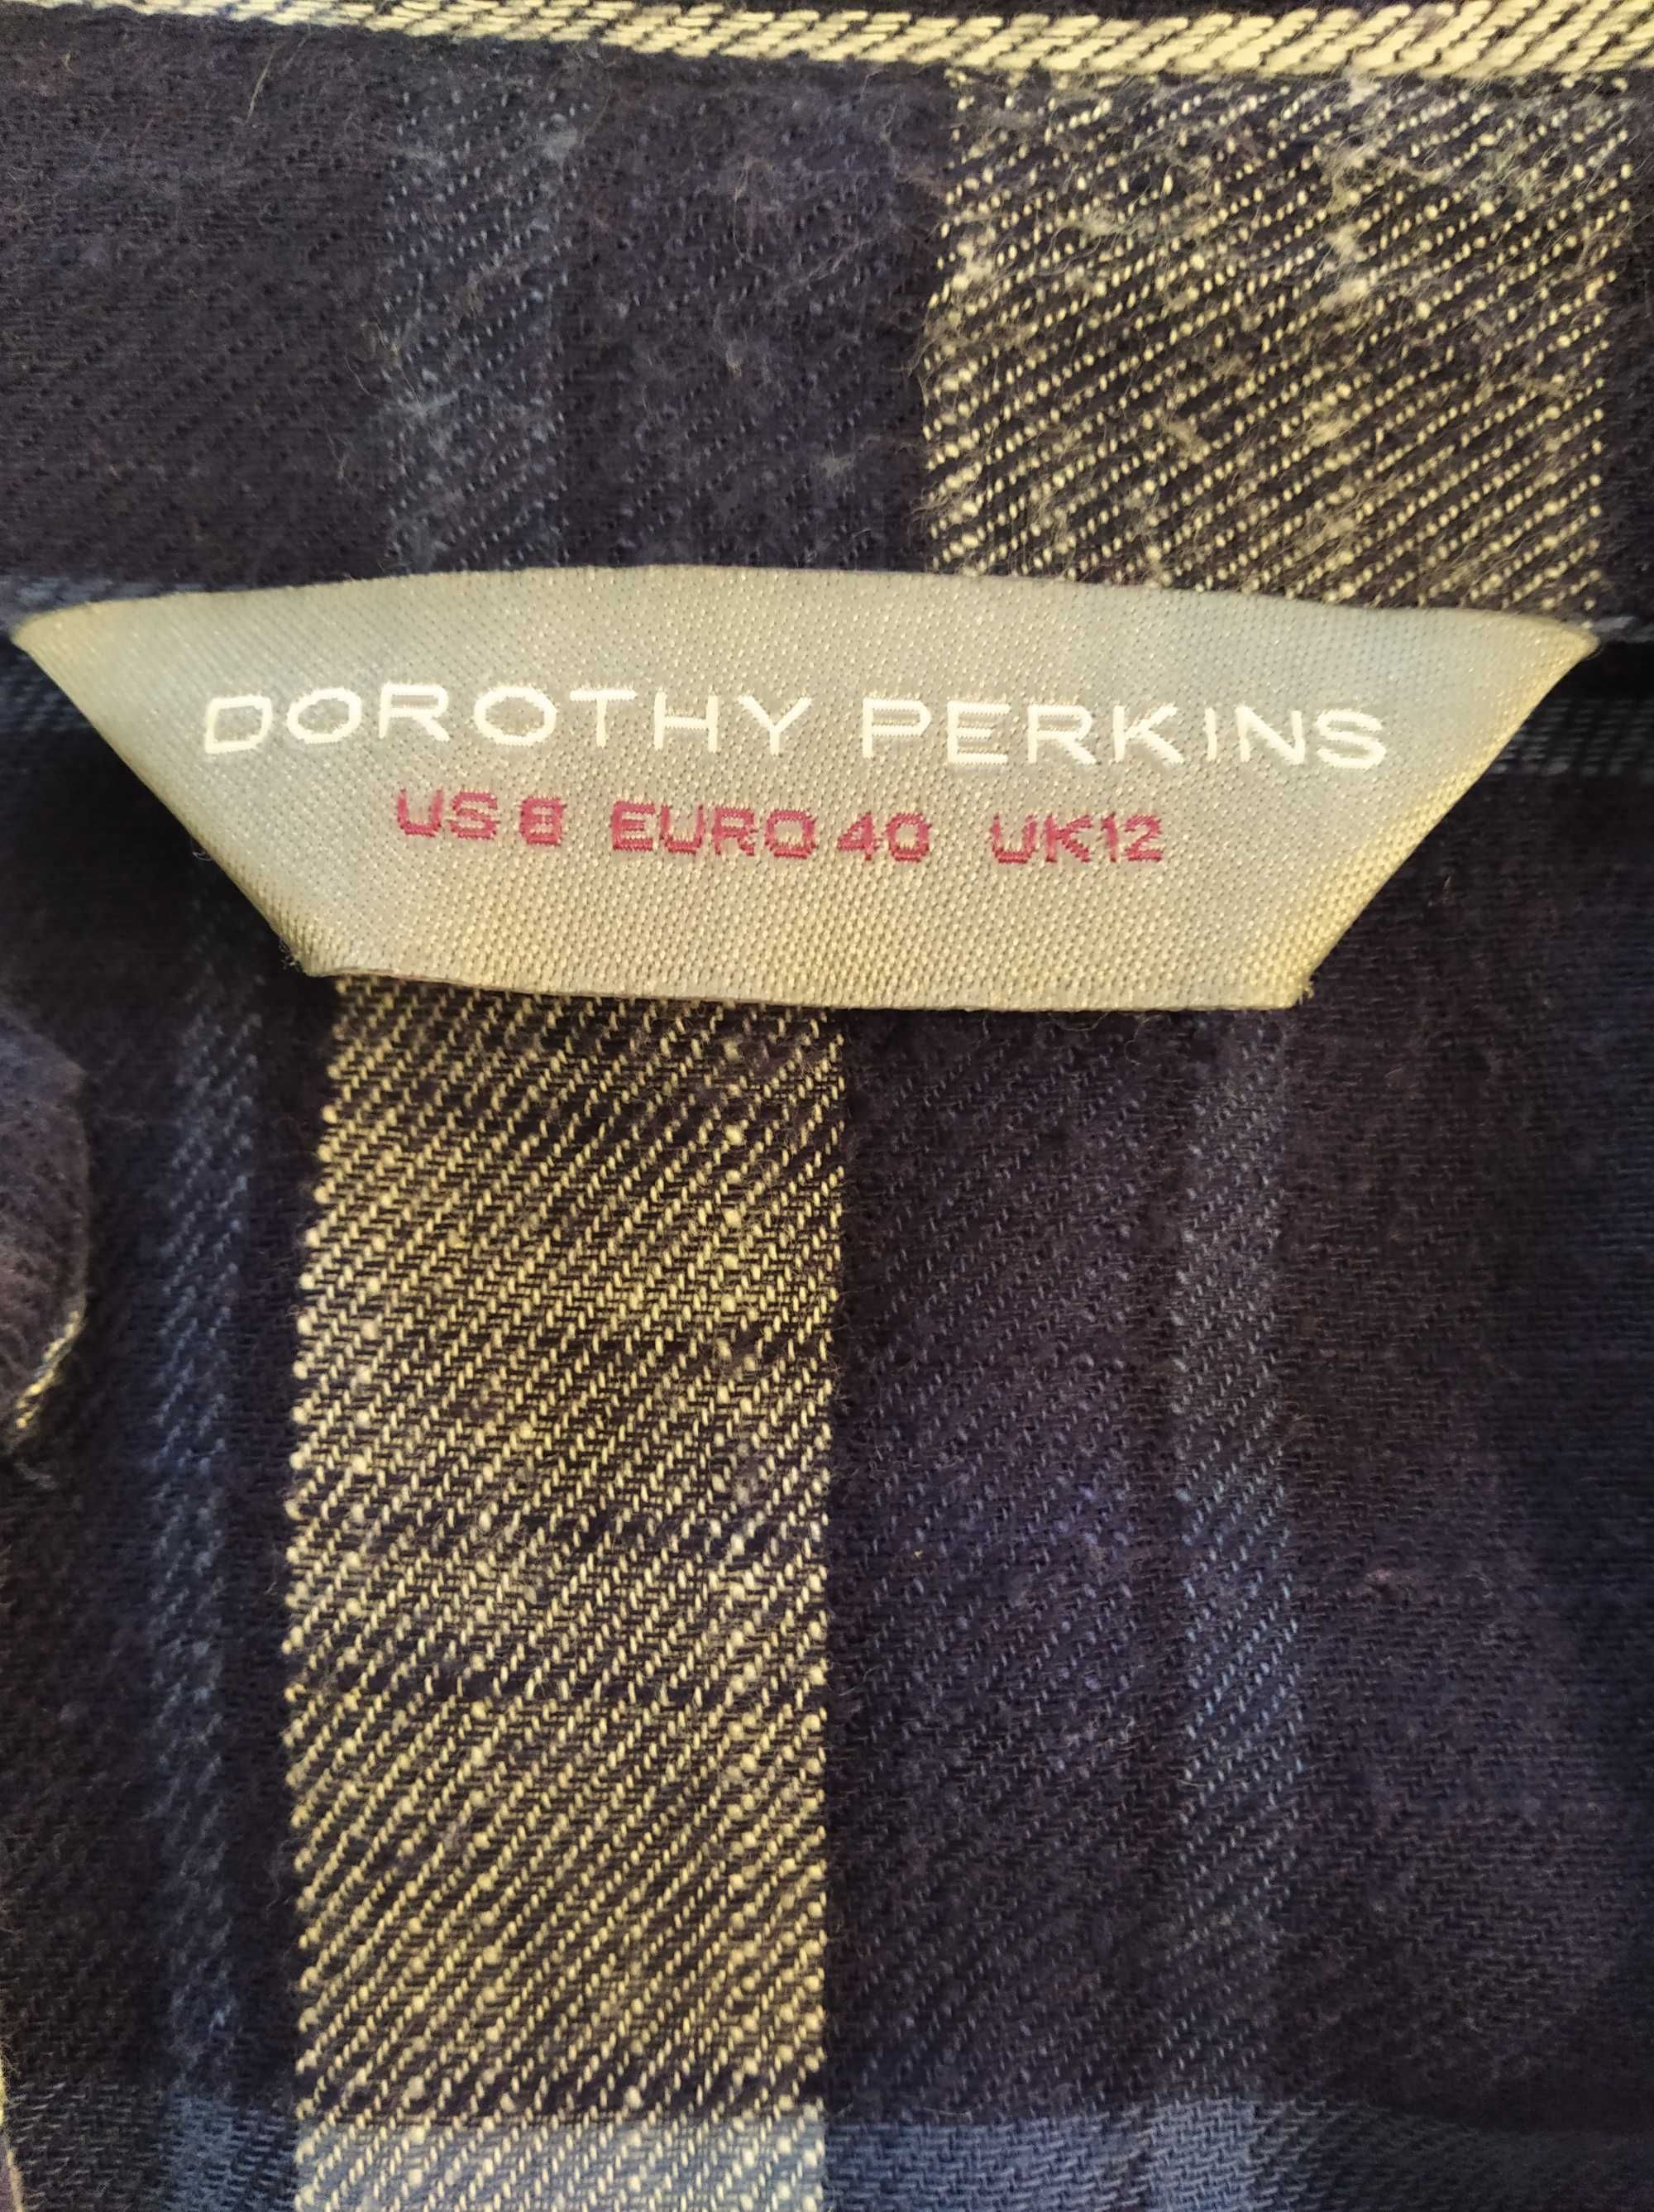 Фланелевая рубашка фирмы Dorothy Perkins. Индия. Размер 8-40-12.